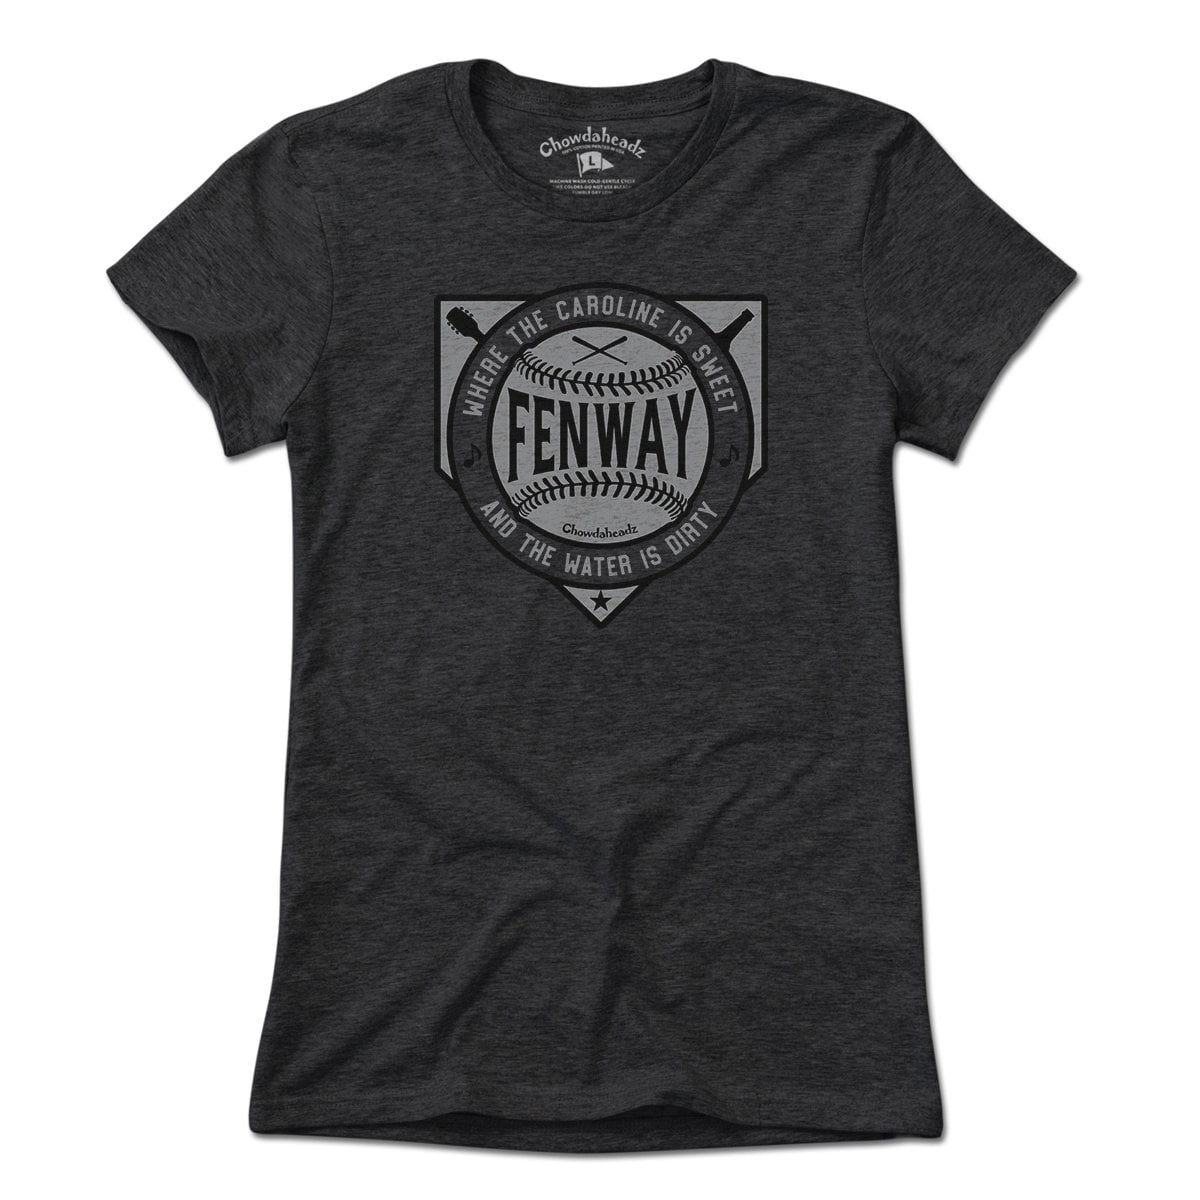 Fenway Sweet & Dirty Blackout T-Shirt - Chowdaheadz